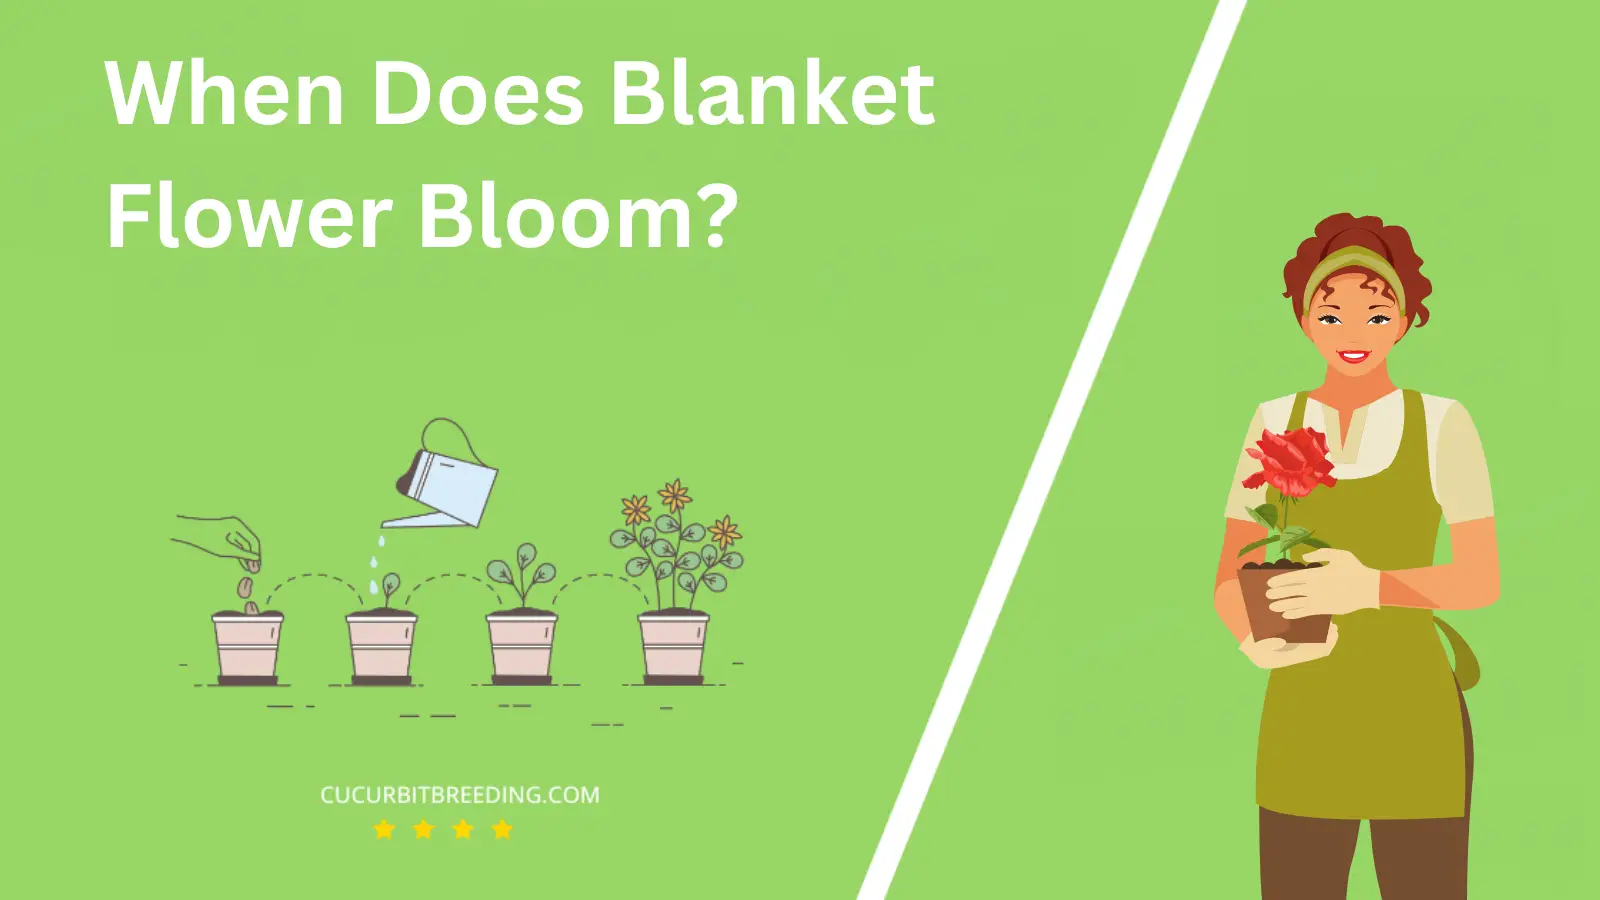 When Does Blanket Flower Bloom?